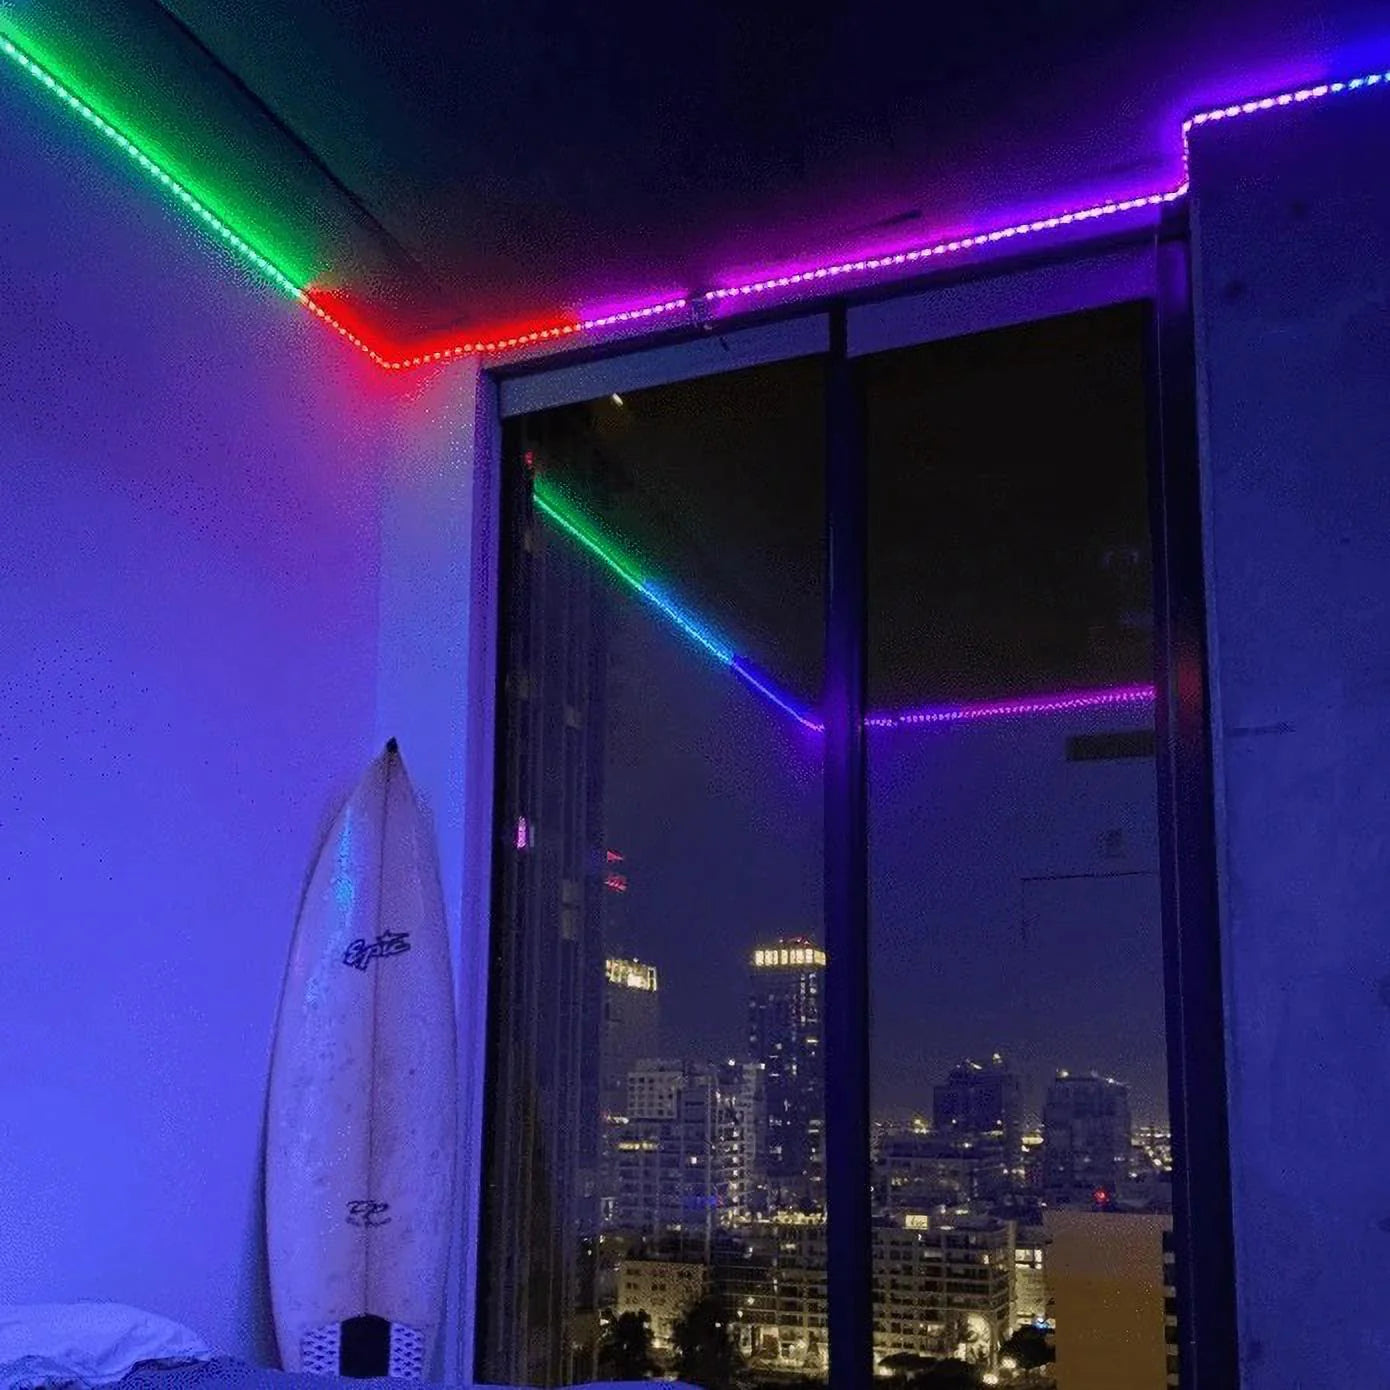 Multicolor LED Lights